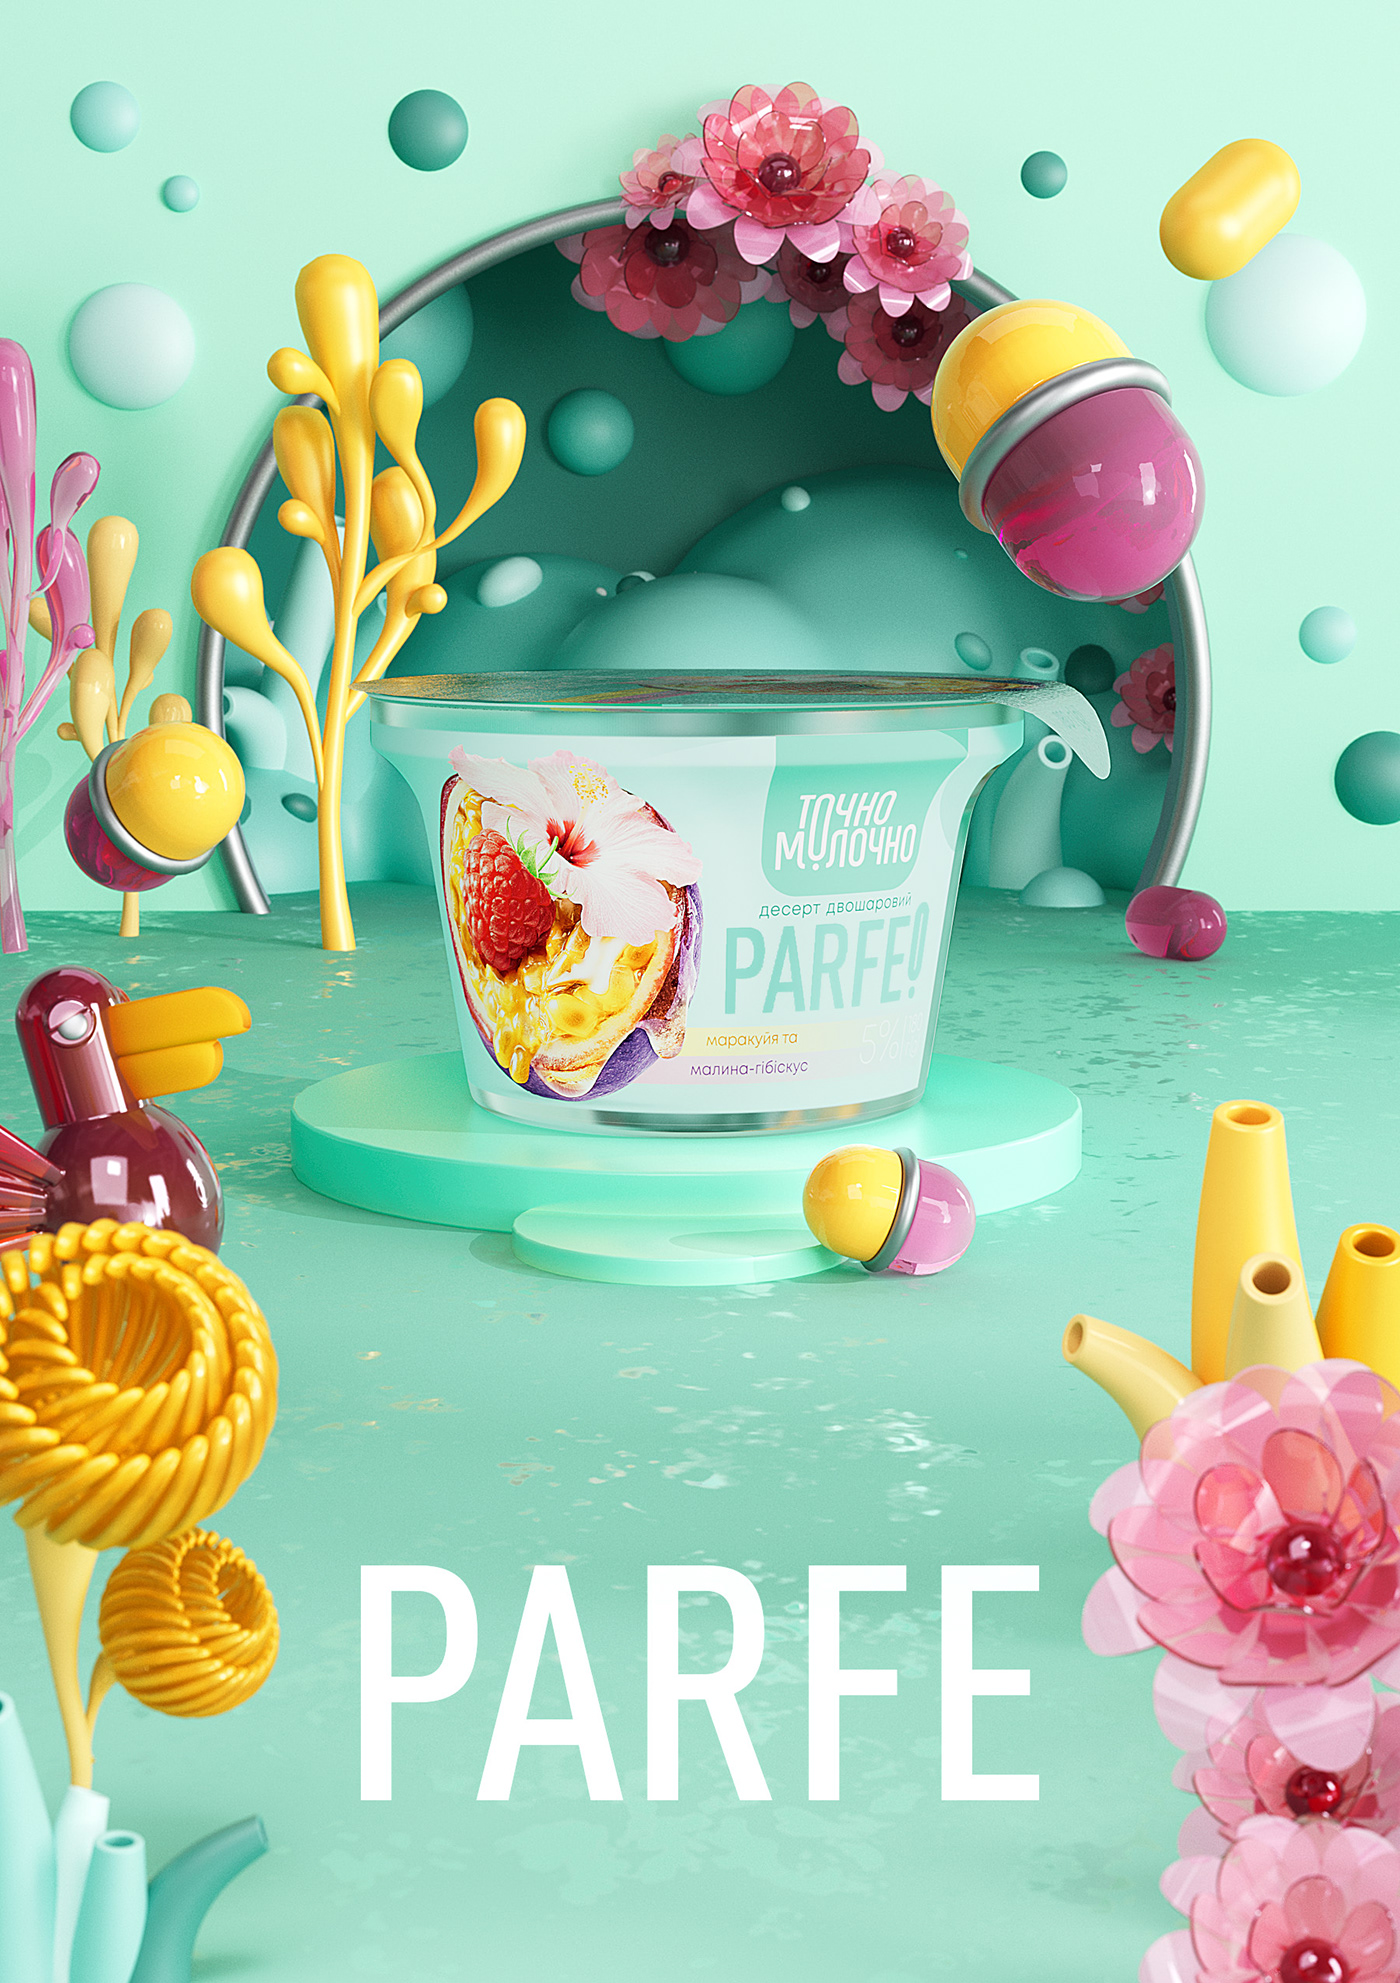 Packing Design 3D yogurt Packaging Brand Design Graphic Designer visual identity eat